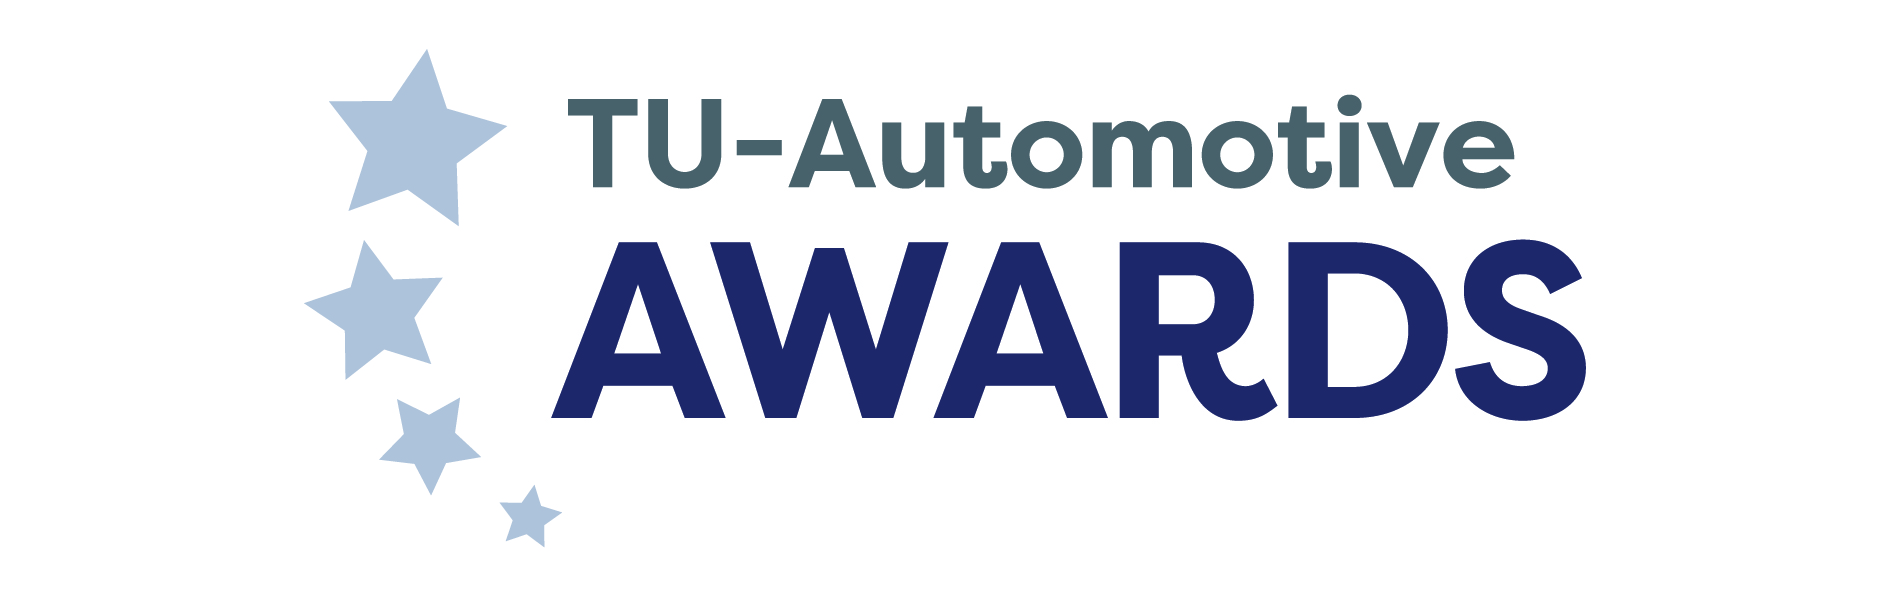 TU-Automotive Awards 